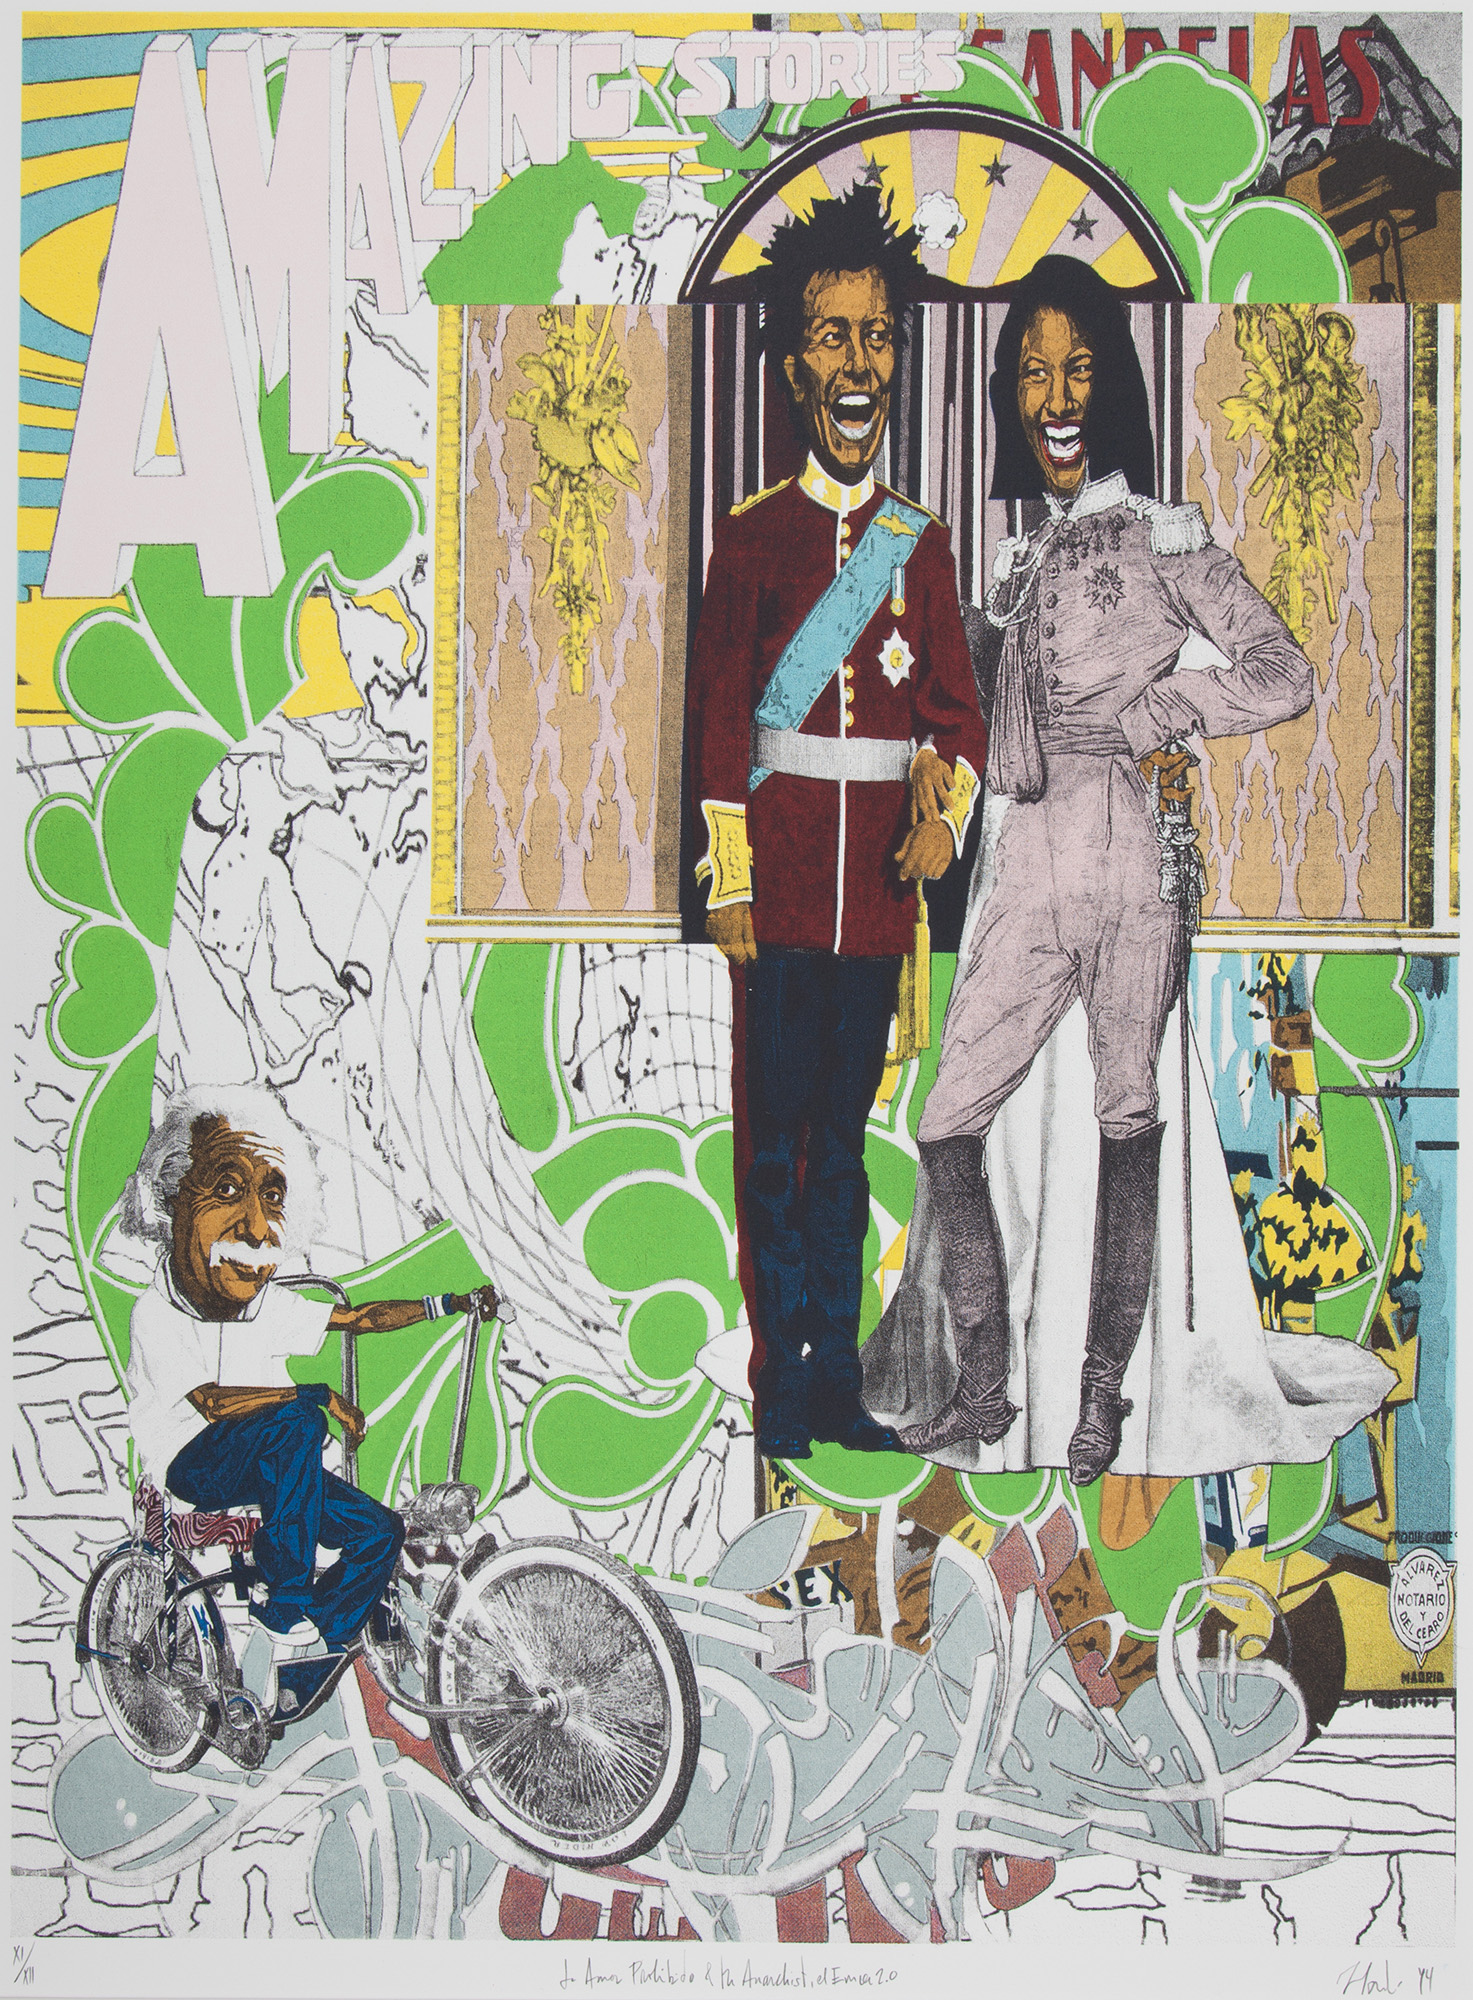 Claudio Dicochea, De Amor Prohibido y el Anaquista, El Emcee 2.0, 2014. Color lithograph on Rives BFK. Collection of DePaul Art Museum, Art Acquisition Endowment, 2014.42 